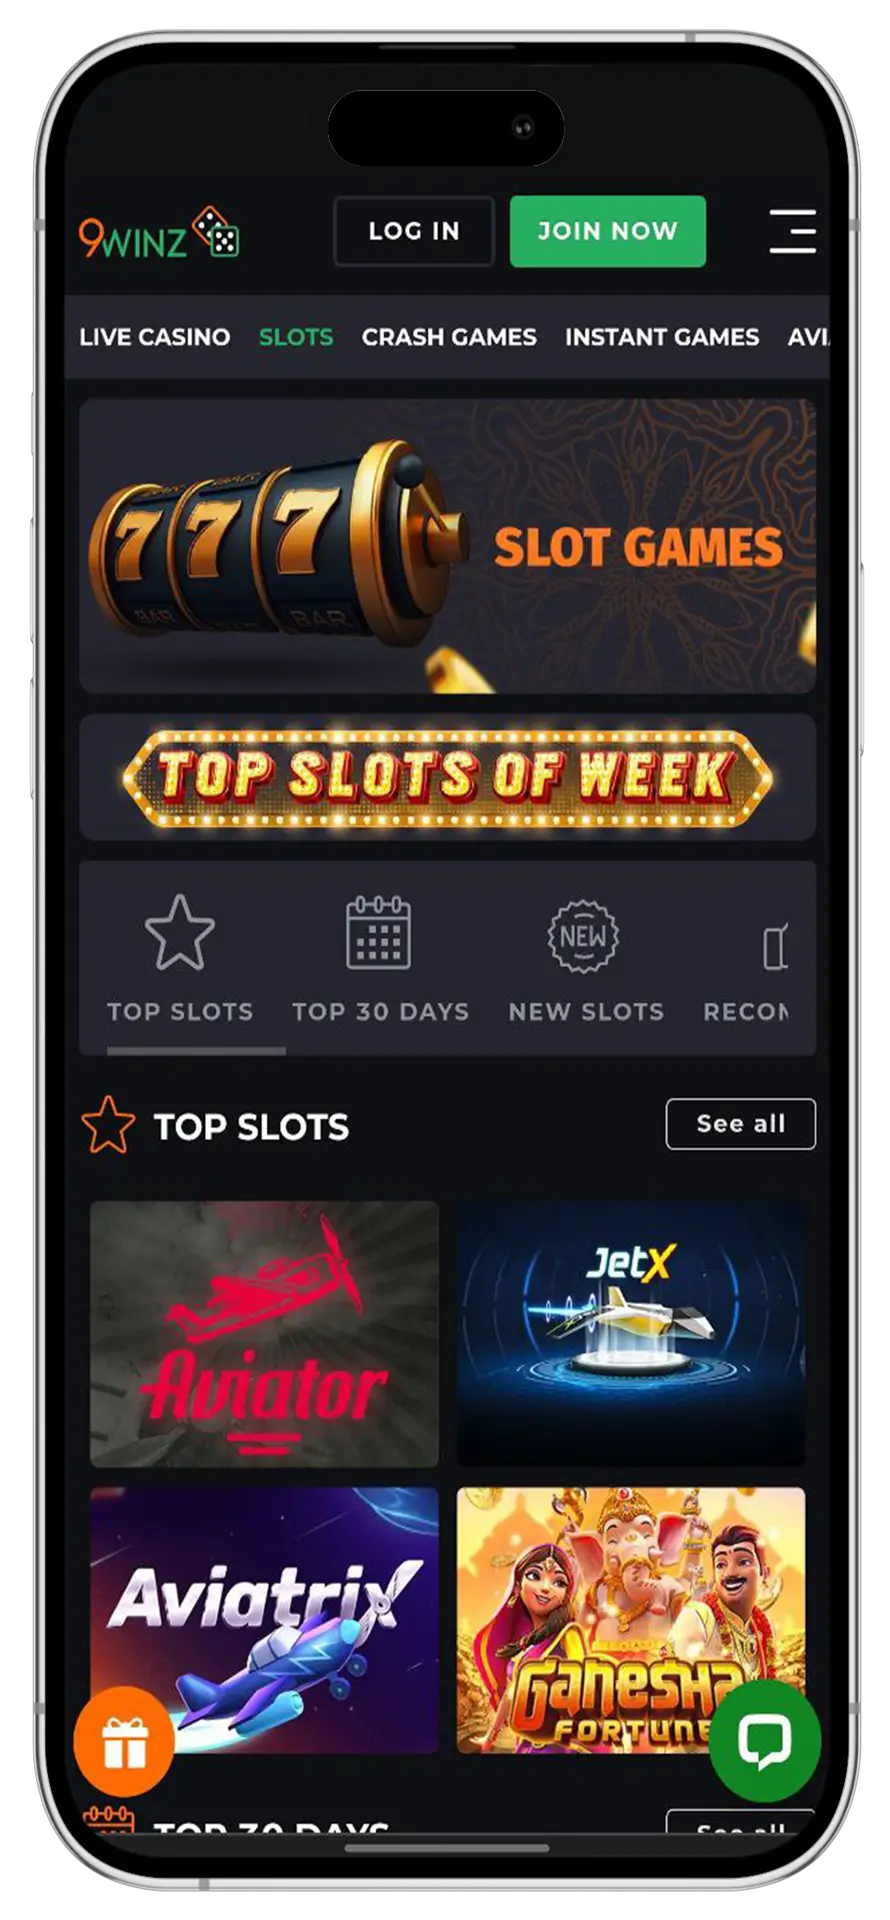 Visit 9winz Casino App Section.